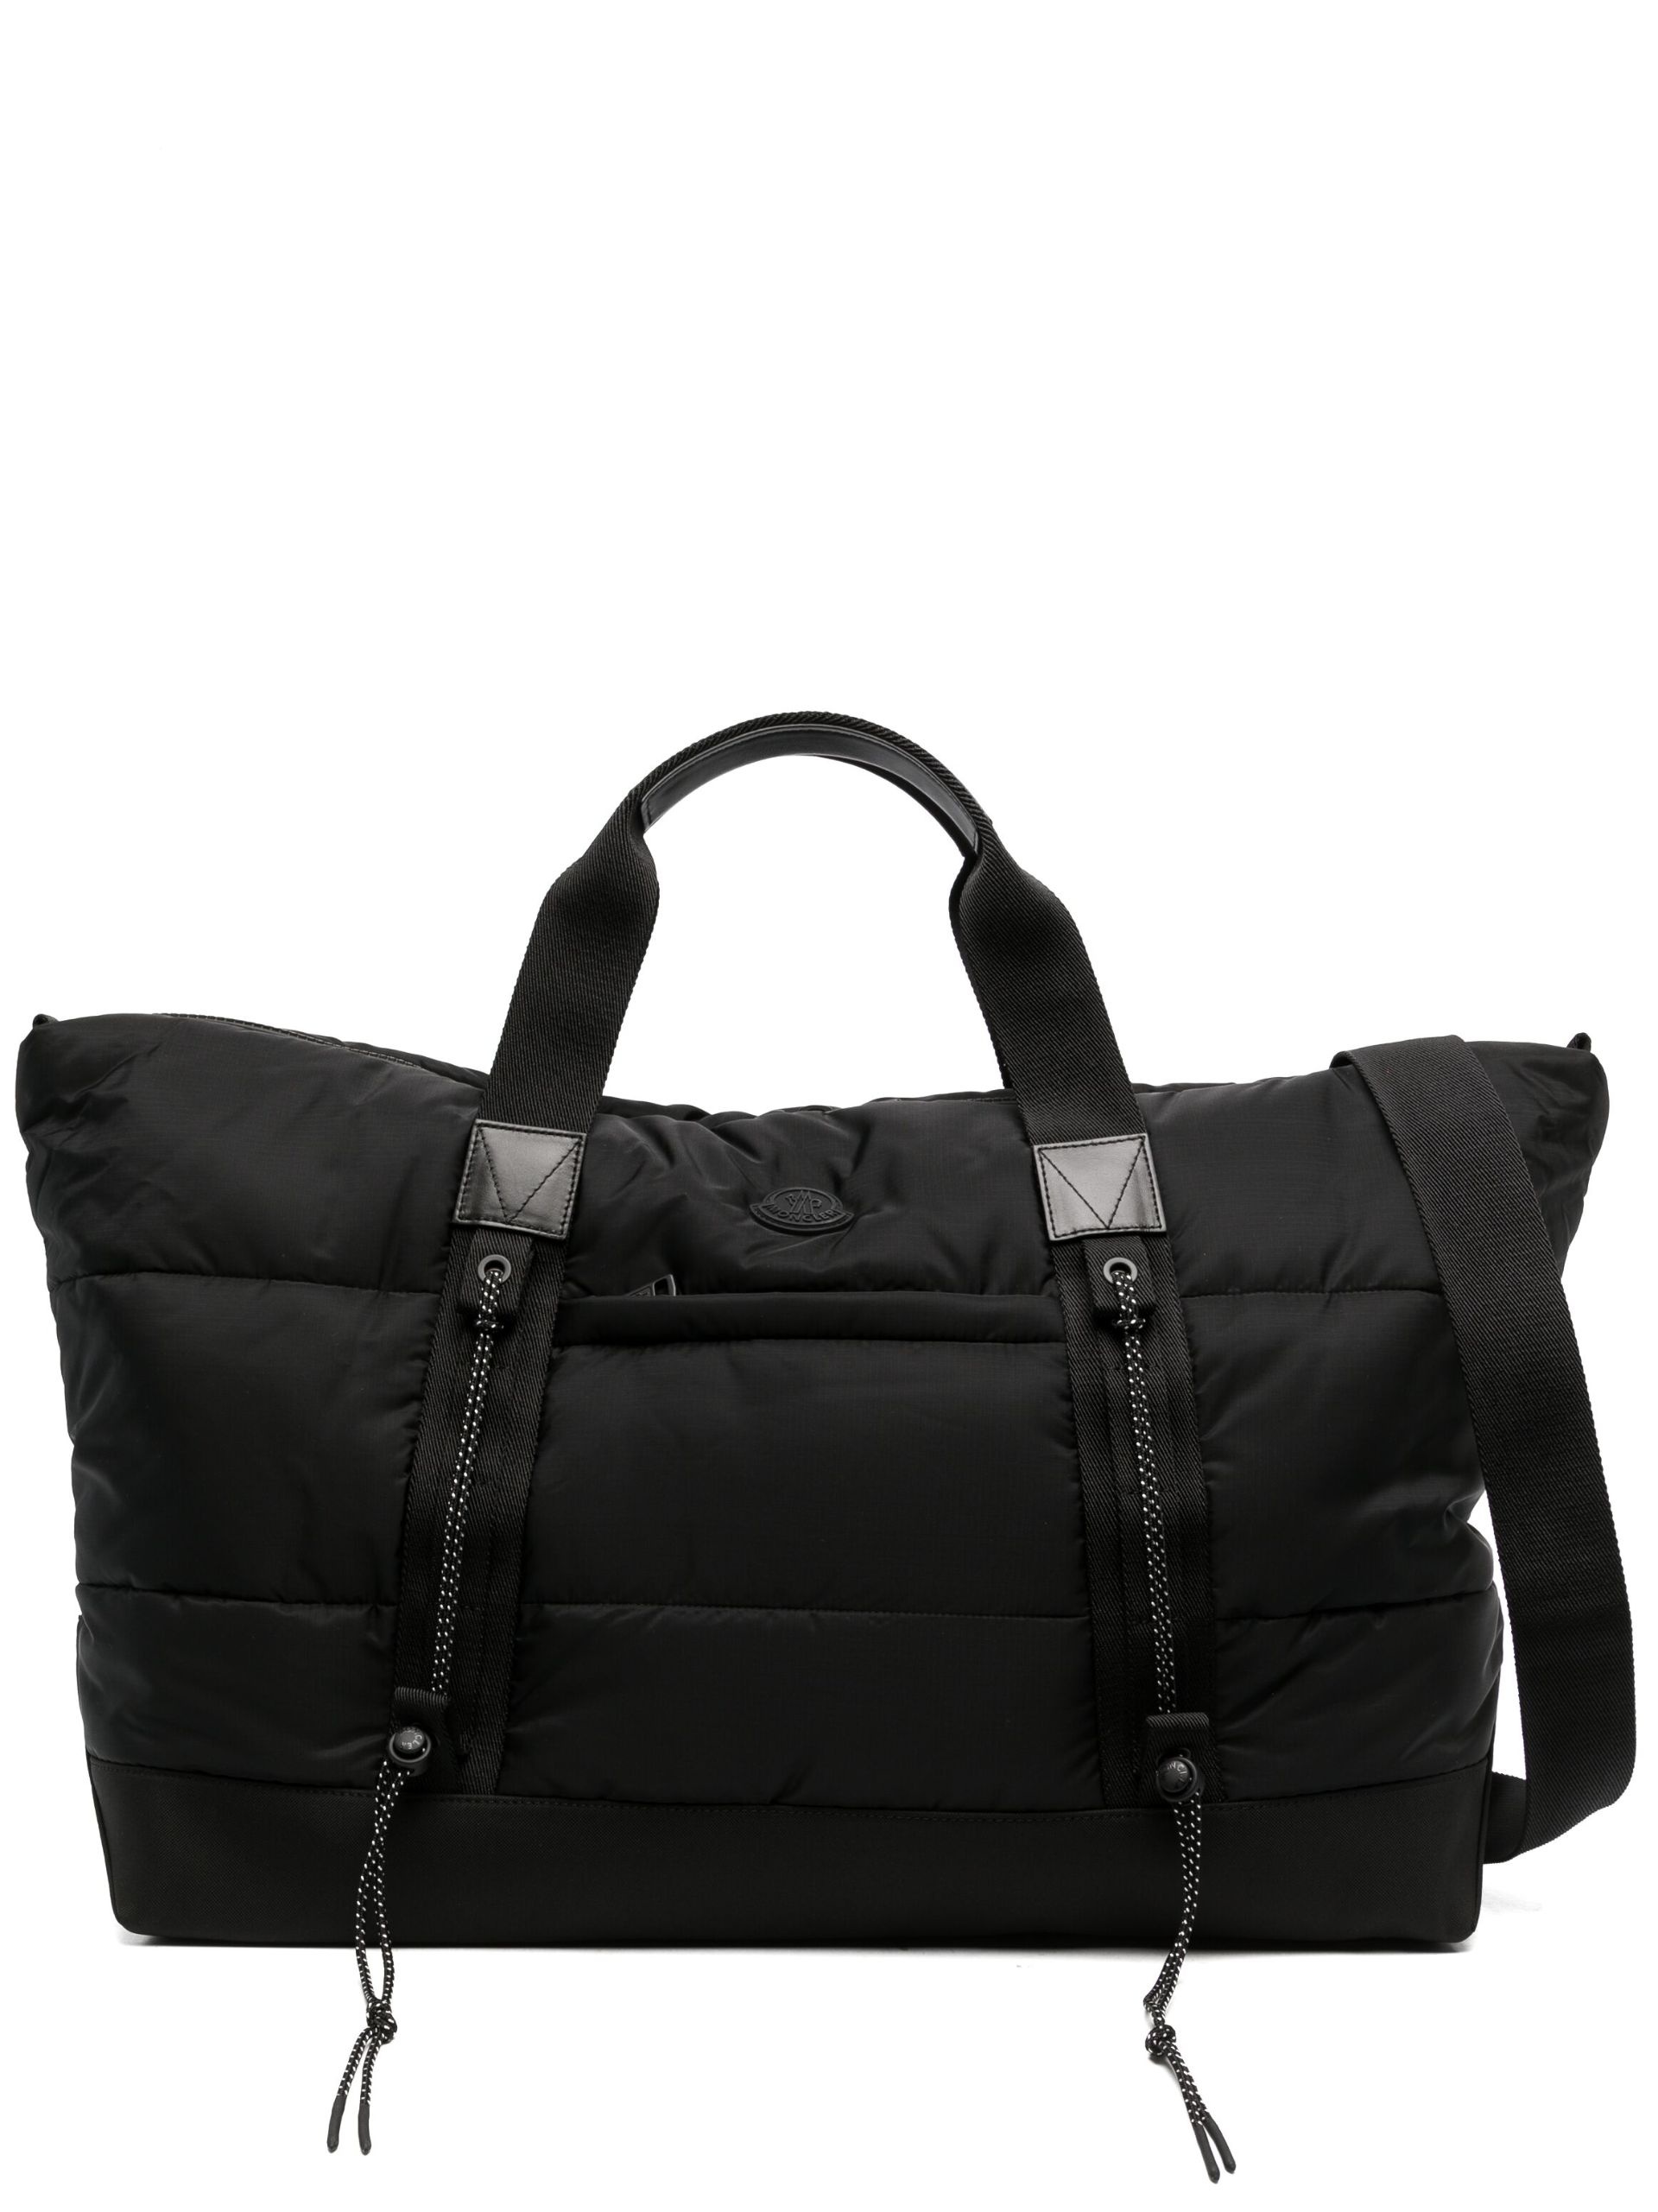 Black Makaio Duffle Bag - 1